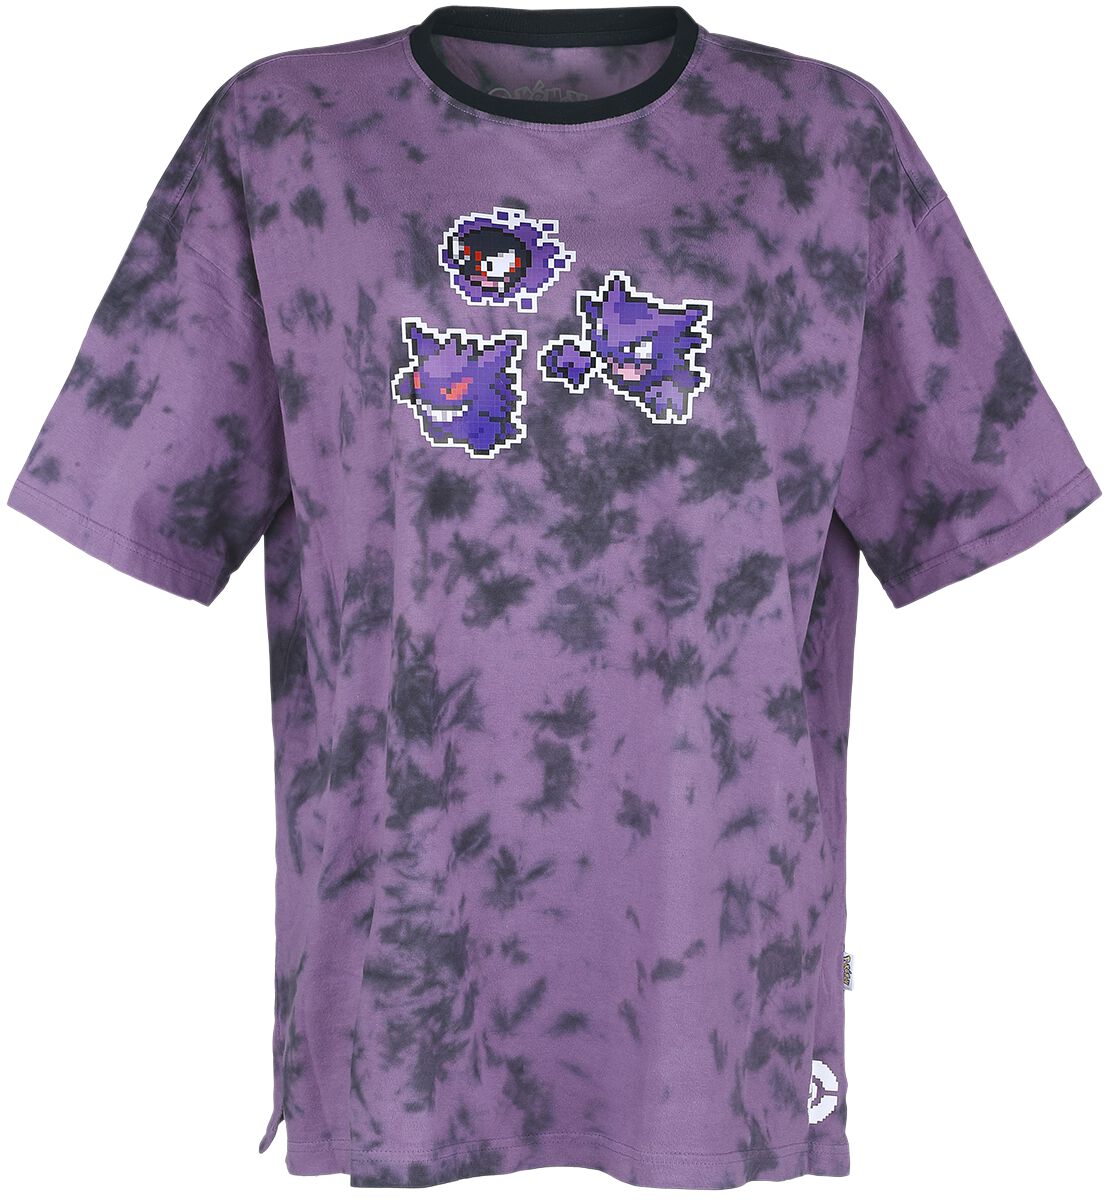 Pokémon Ghost T-Shirt black lilac